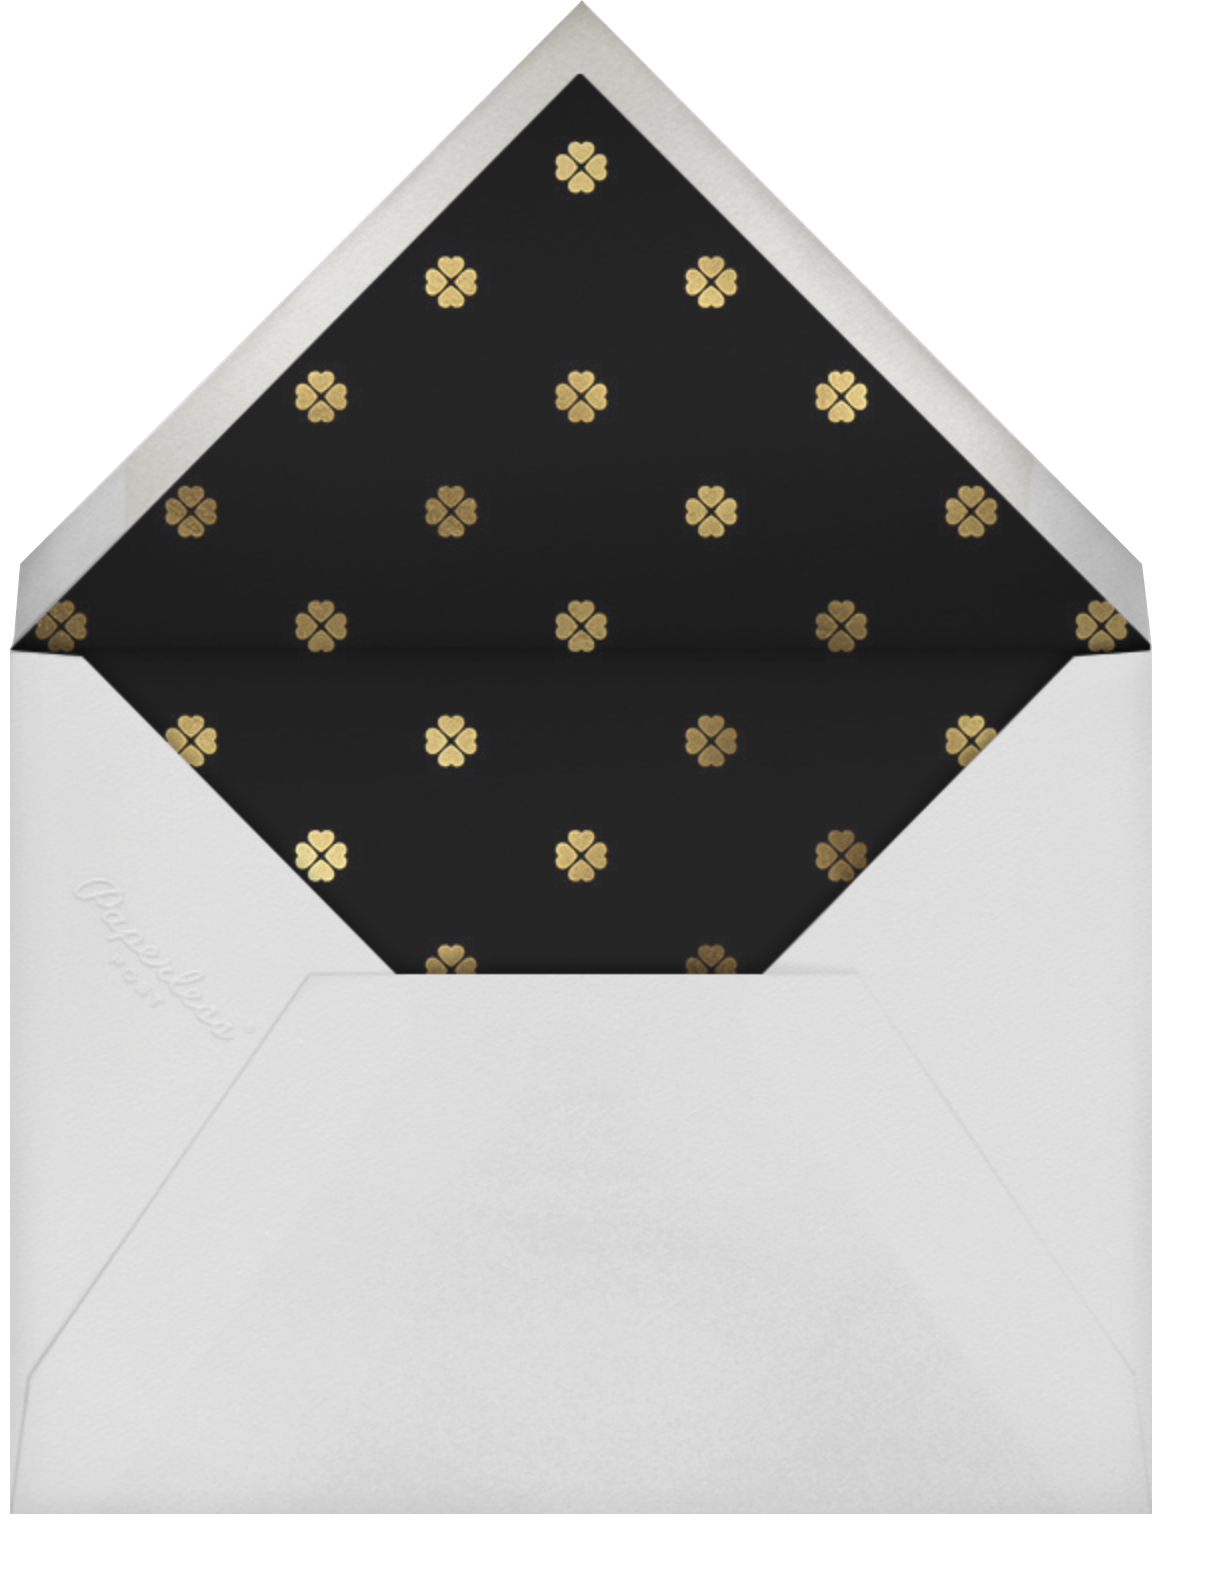 Colorblocked Stripes - Black/Rose - kate spade new york - Envelope